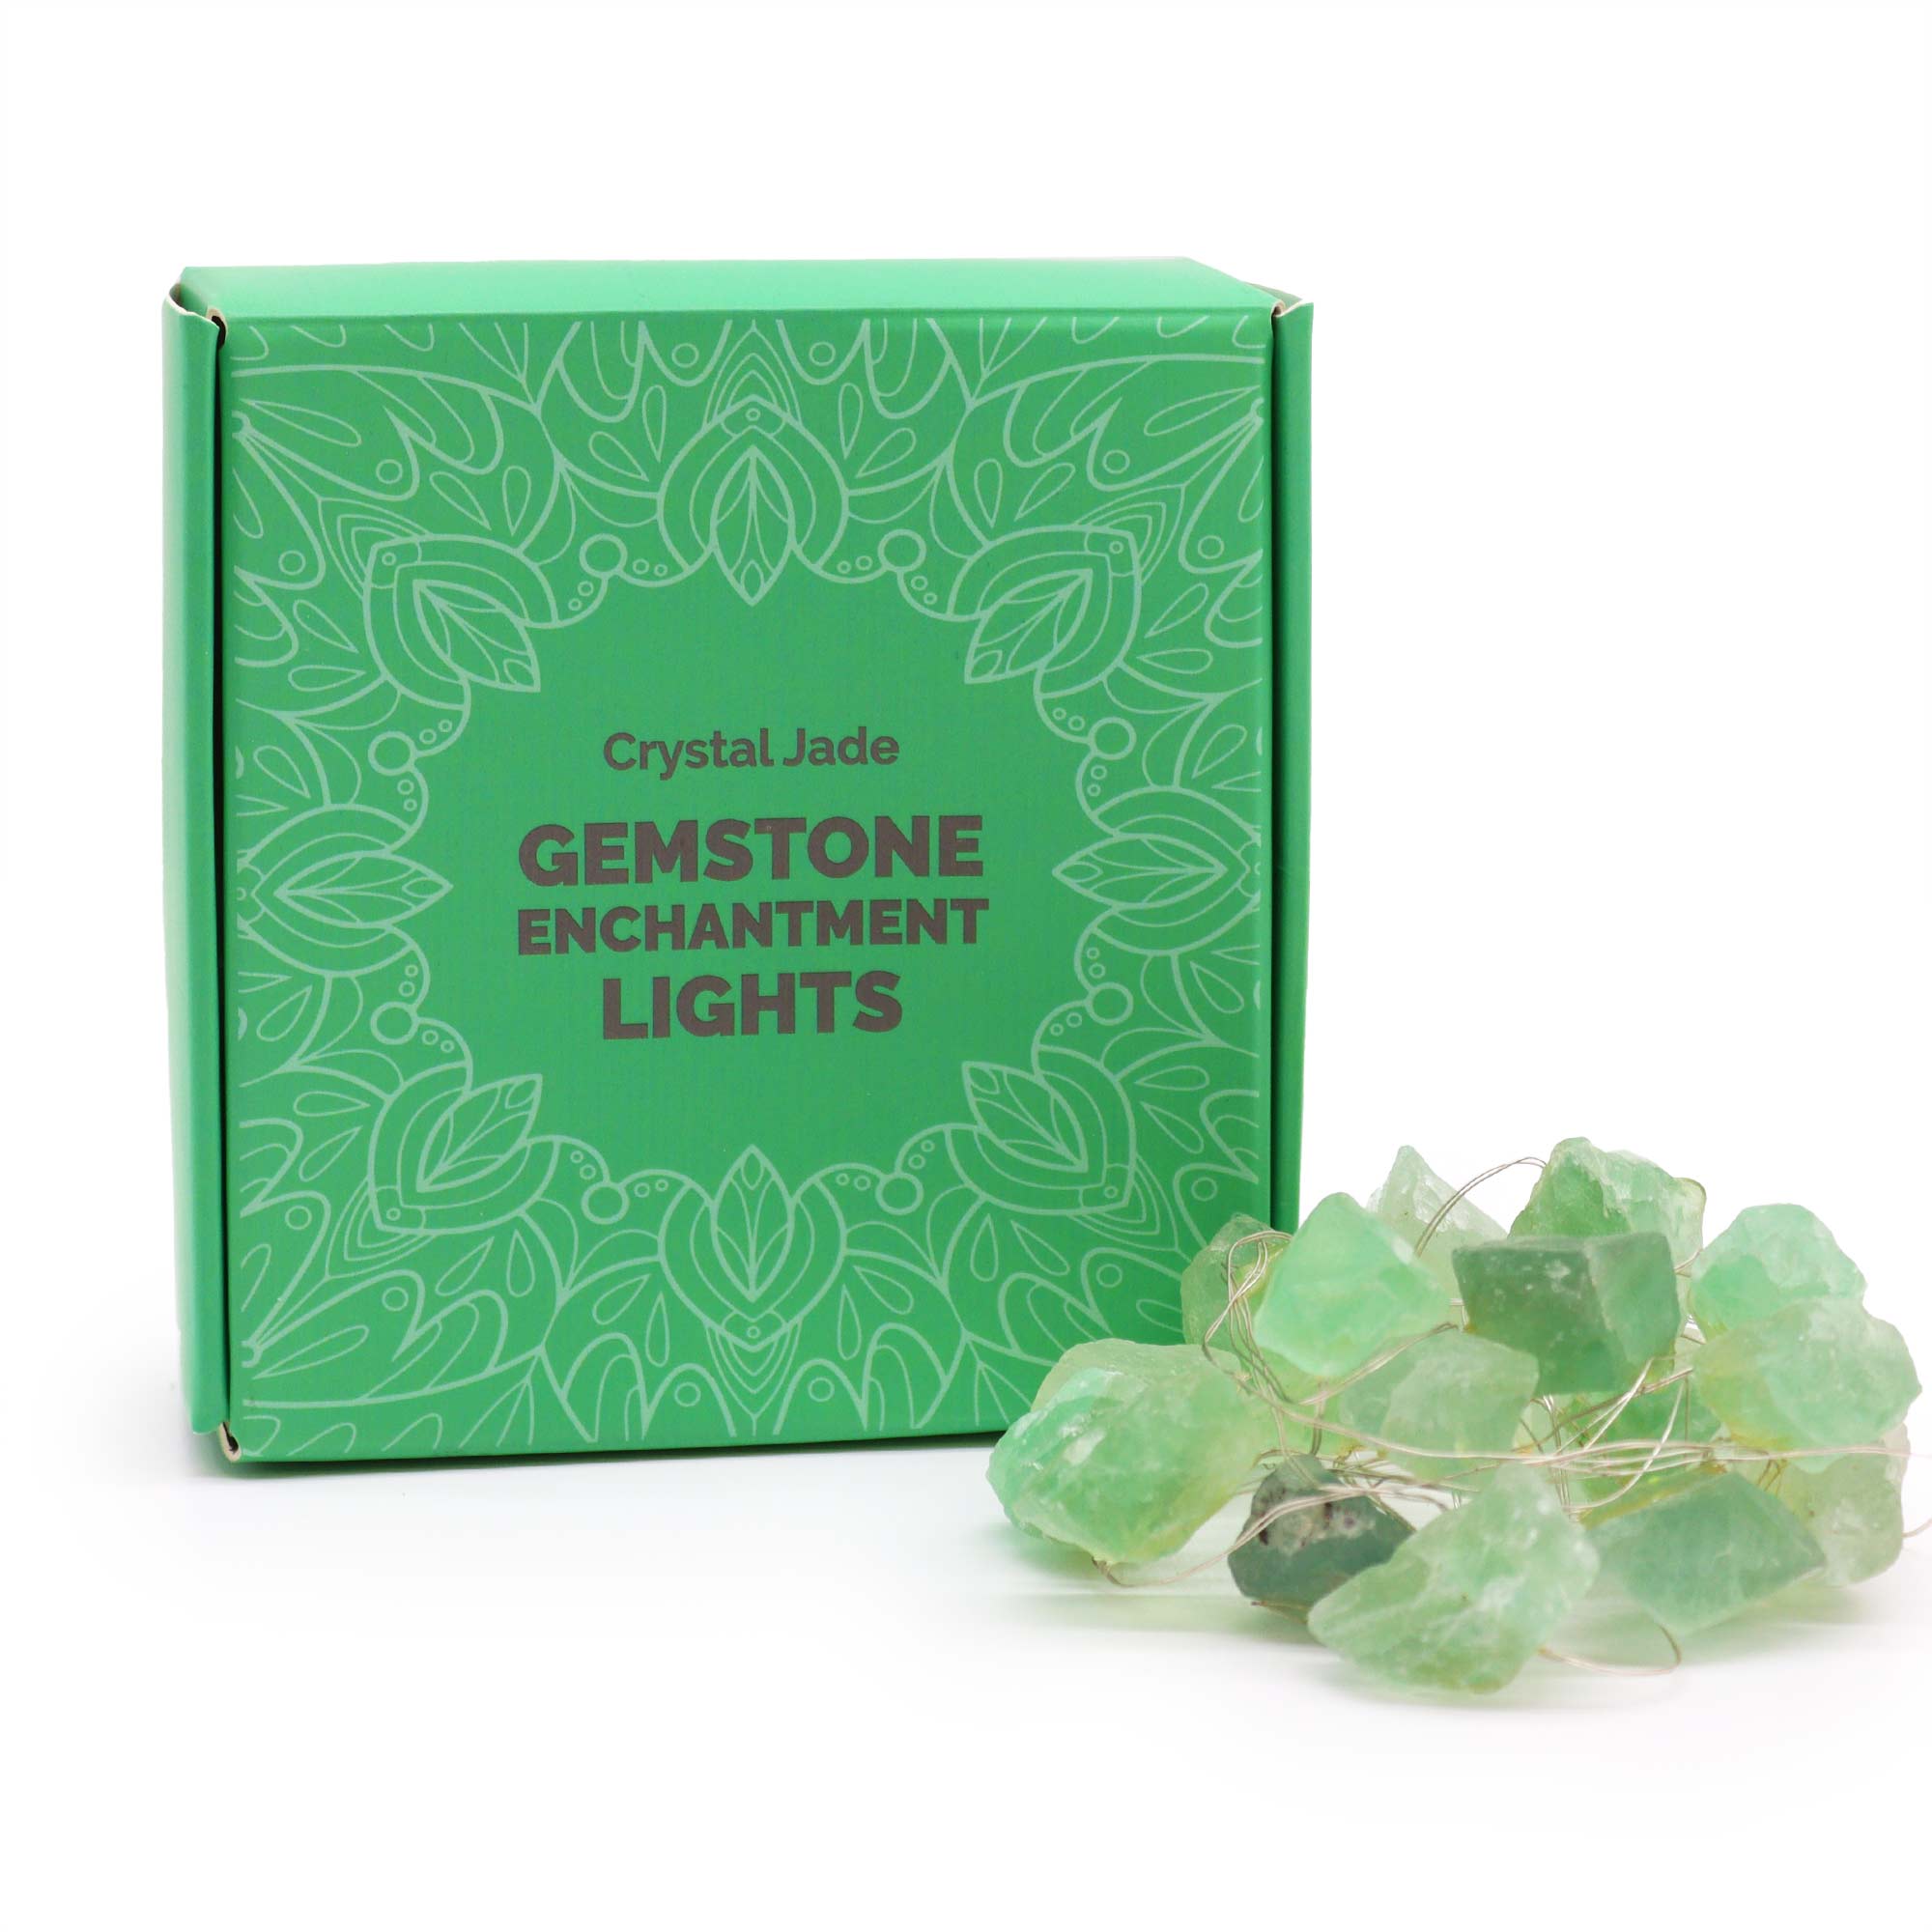 View Gemstone Enchantment Lights Crystal Jade information